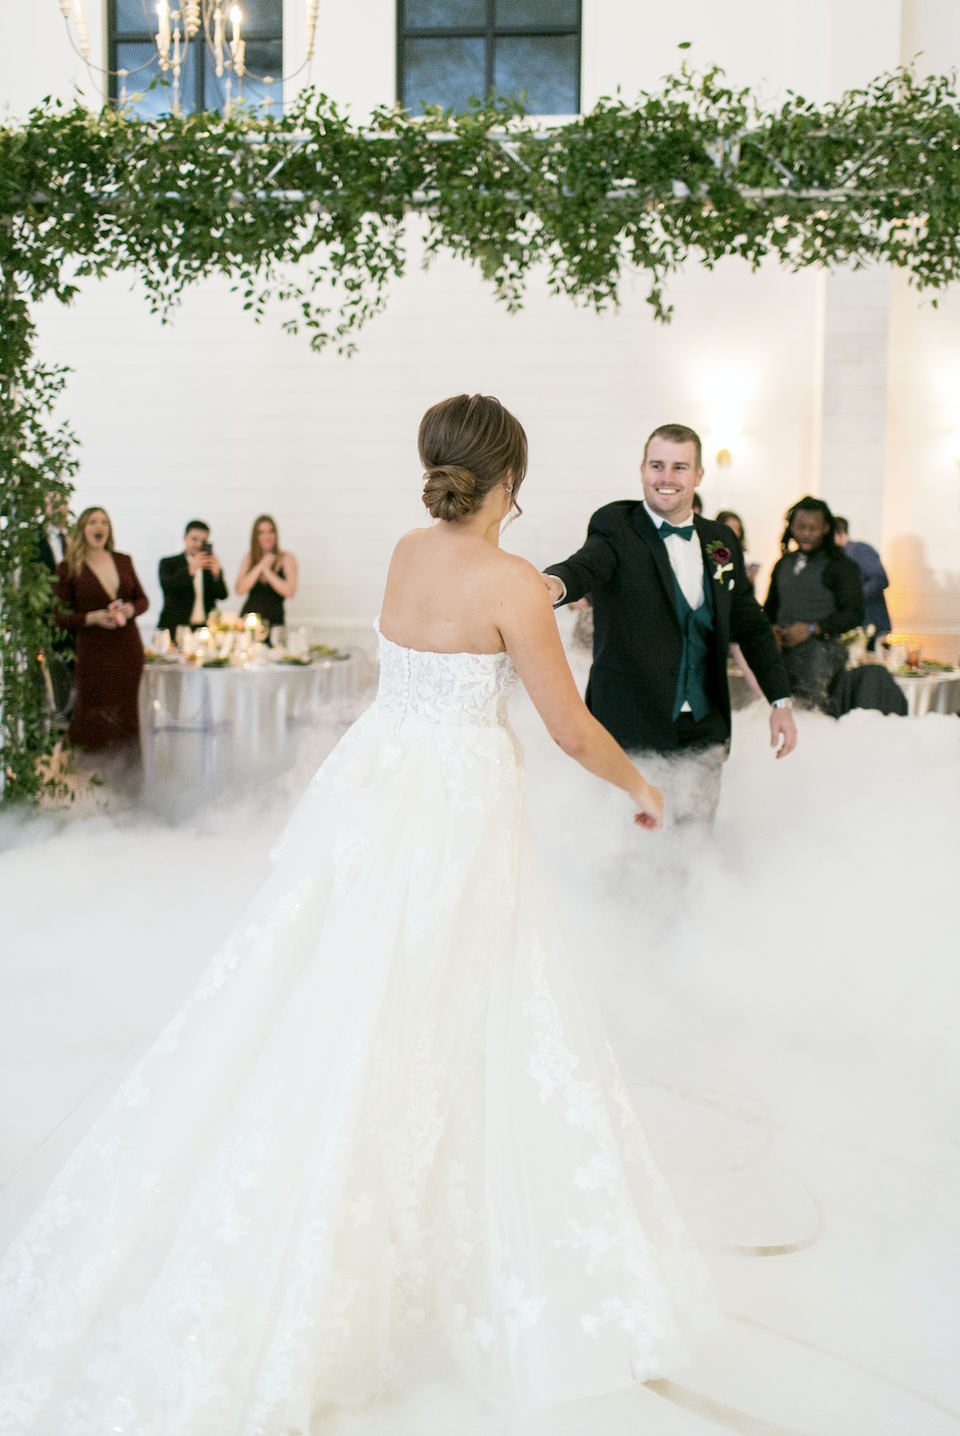 bride and groom first dance fog machine